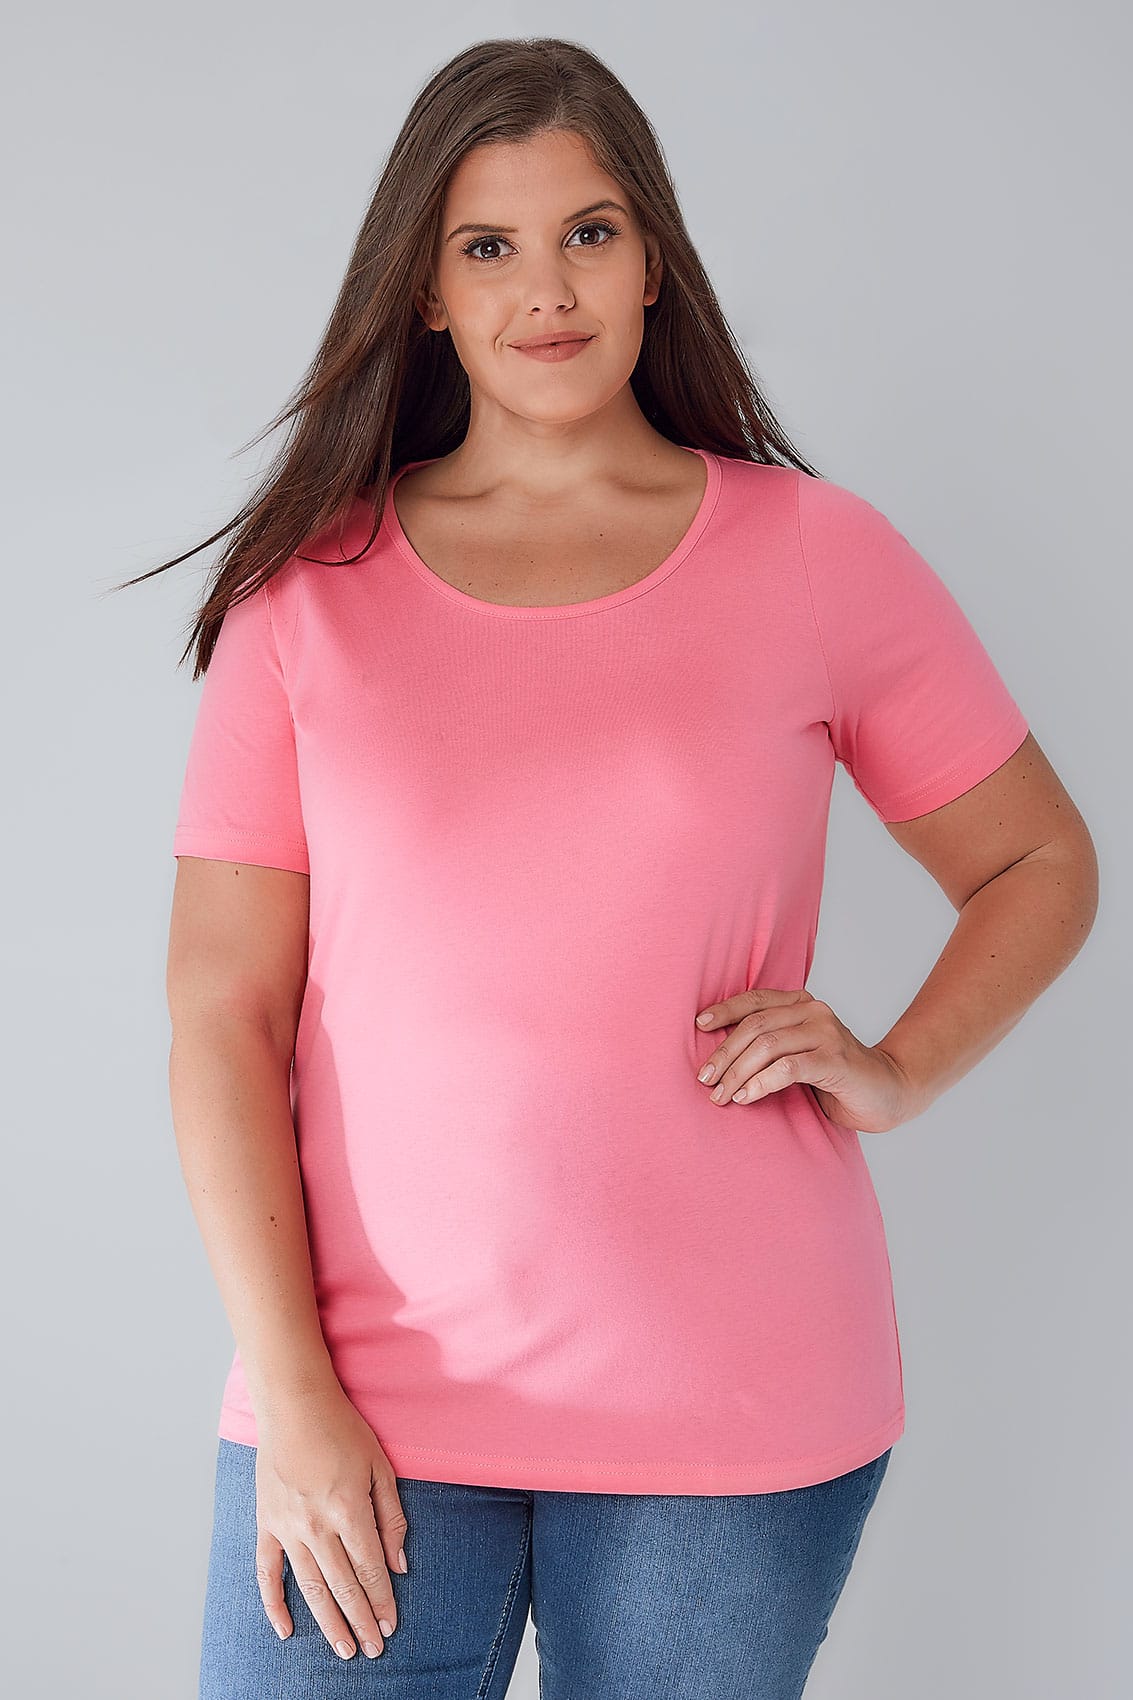 Bubblegum Pink Scoop Neck Basic T-Shirt, Plus size 16 to 36